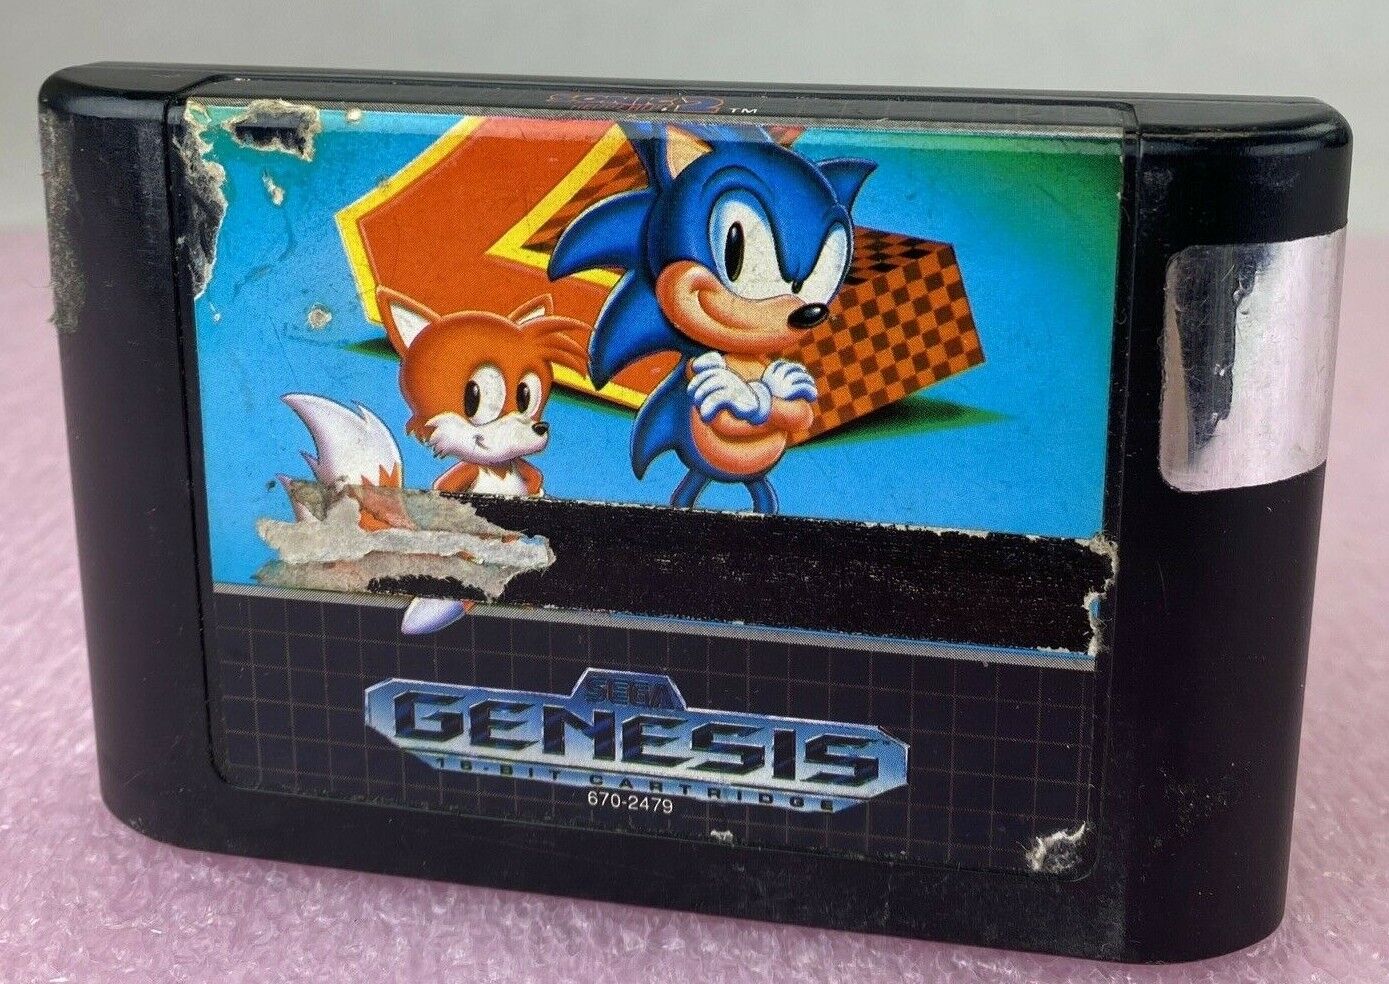 Buy Sonic the Hedgehog 2 Mega Drive Australia